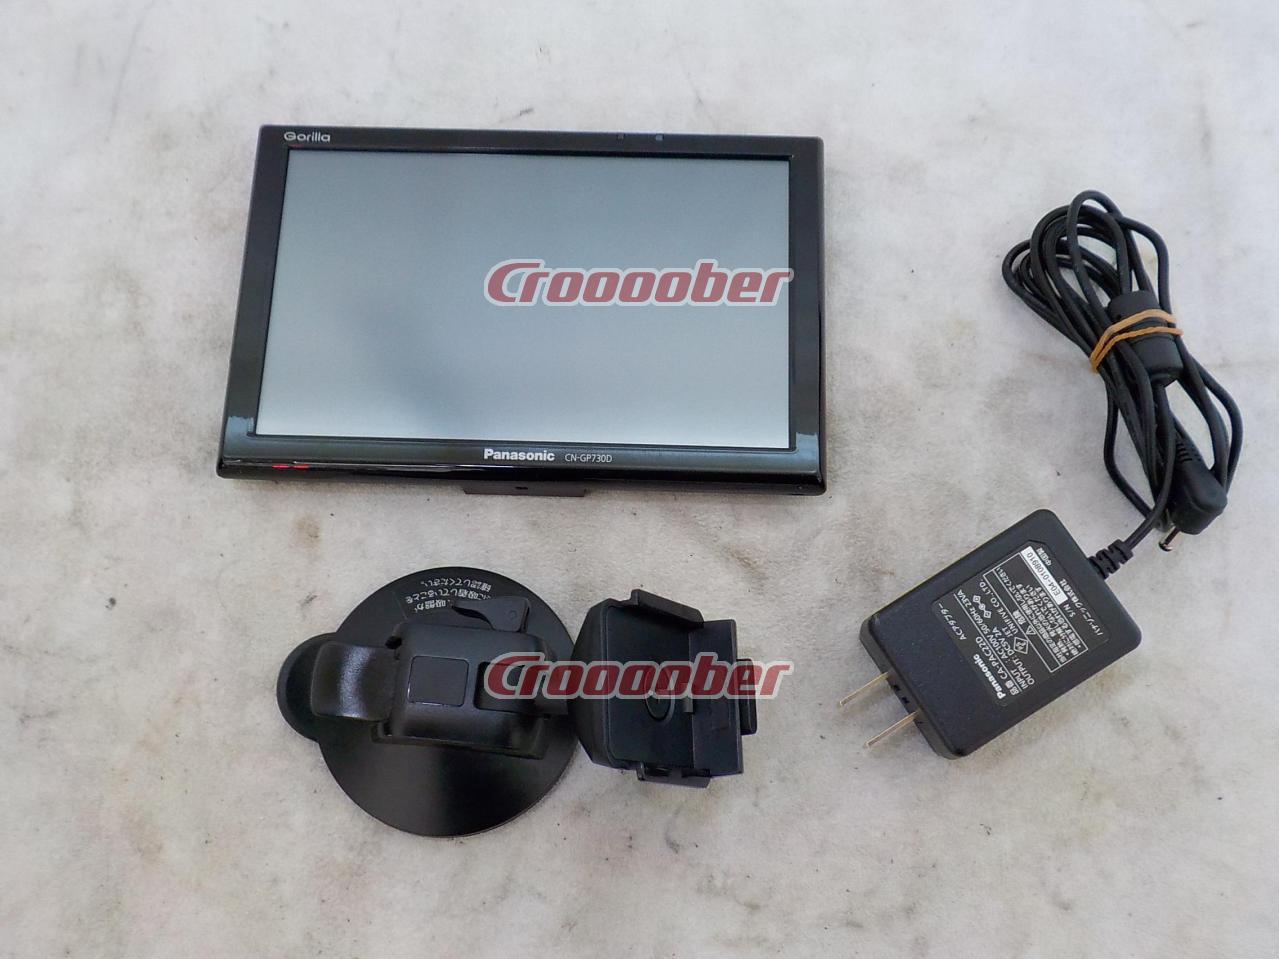 Panasonic Gorilla CN-GP730D | Portable Navigation(digital) | Croooober